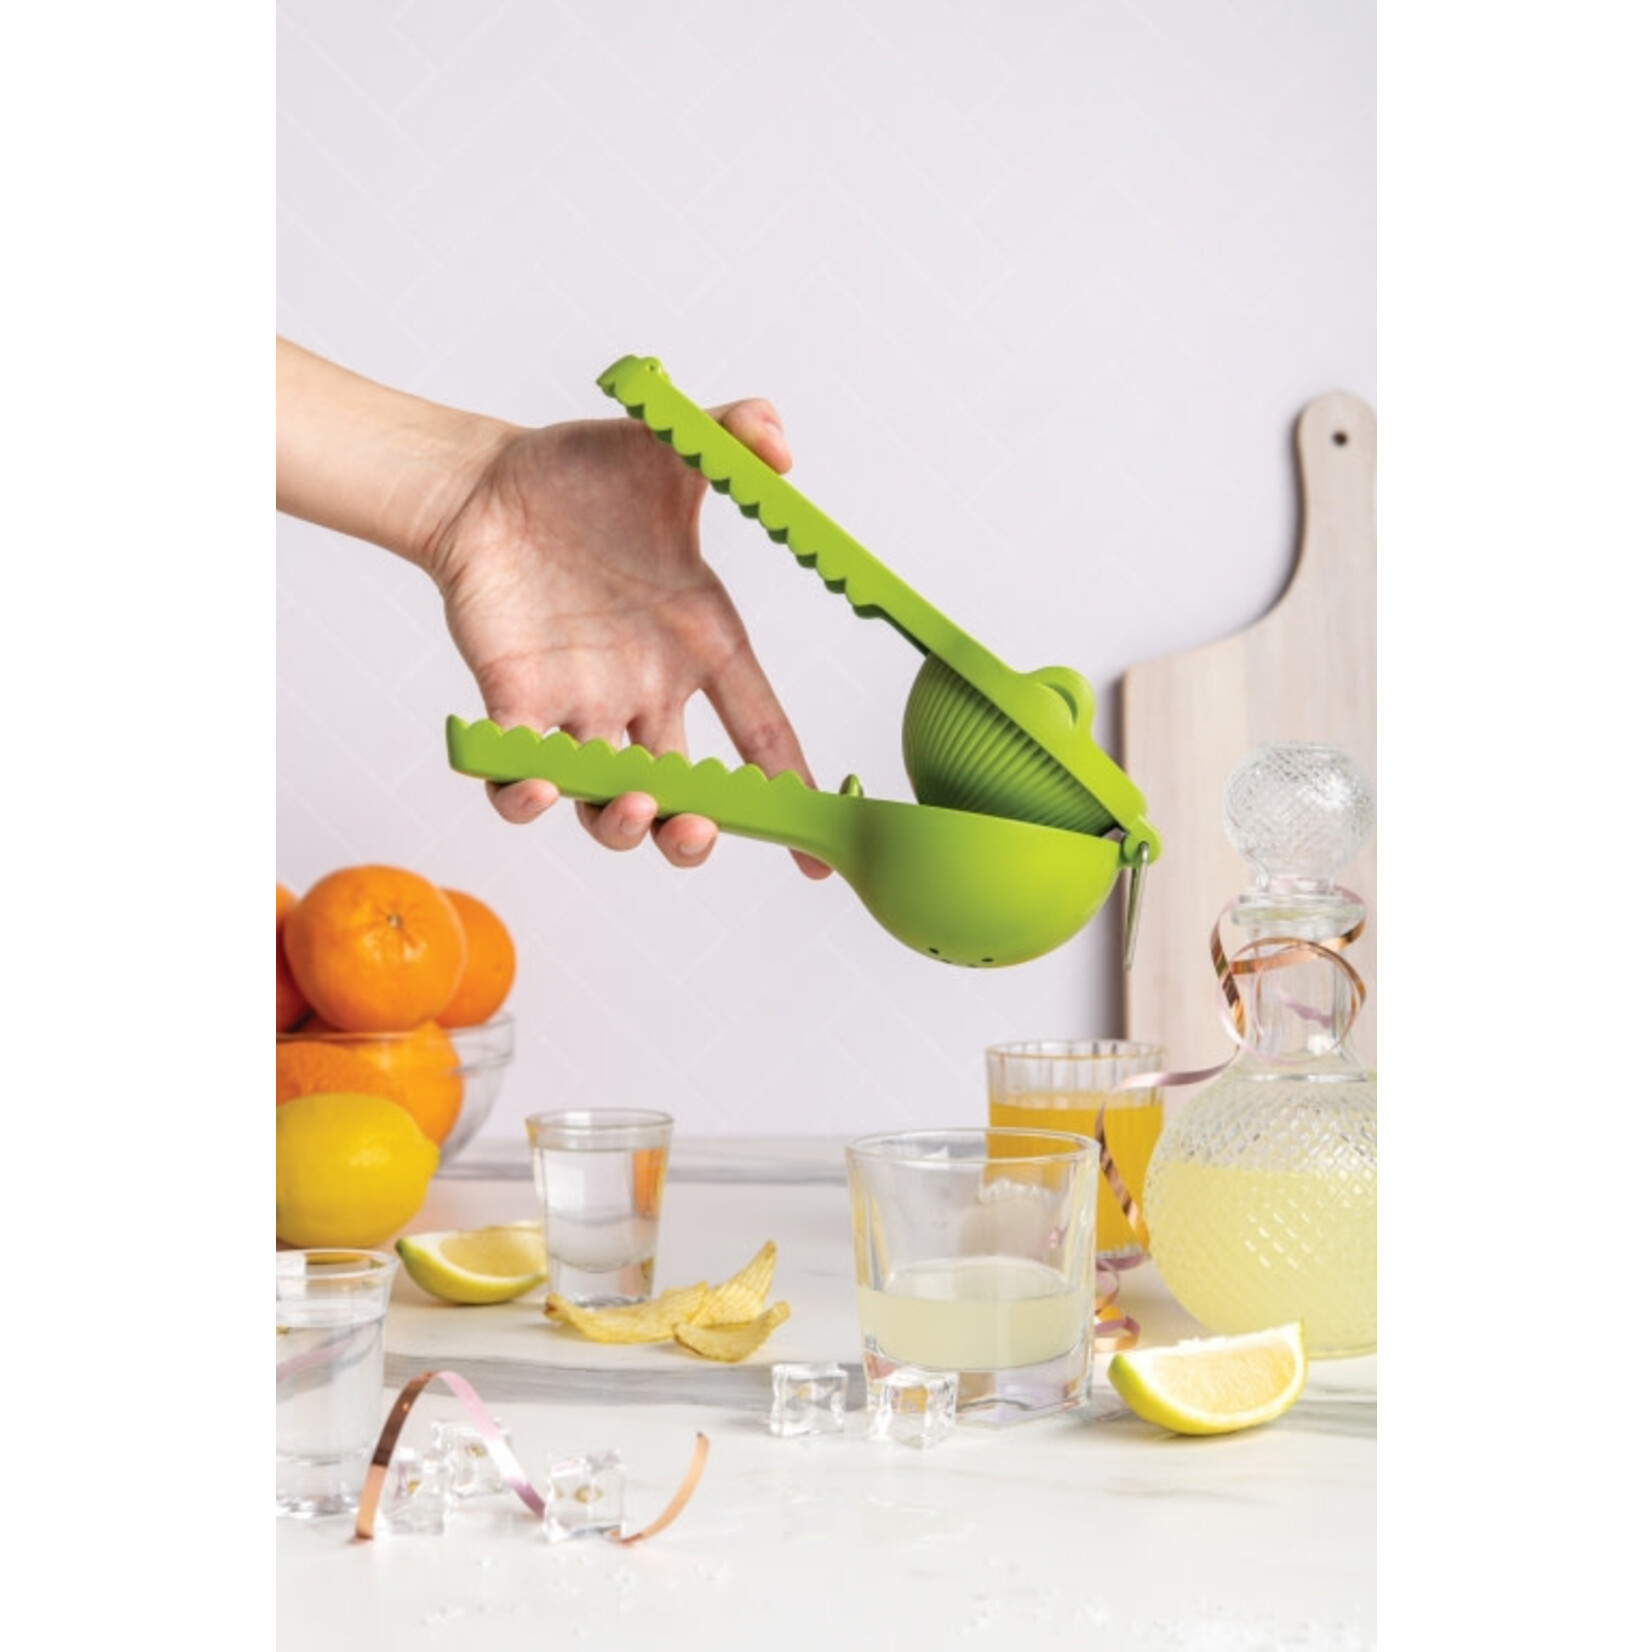 Diverse Merken Citruspers Ototo Design Lemongator handmatige citruspers Ototo ot975